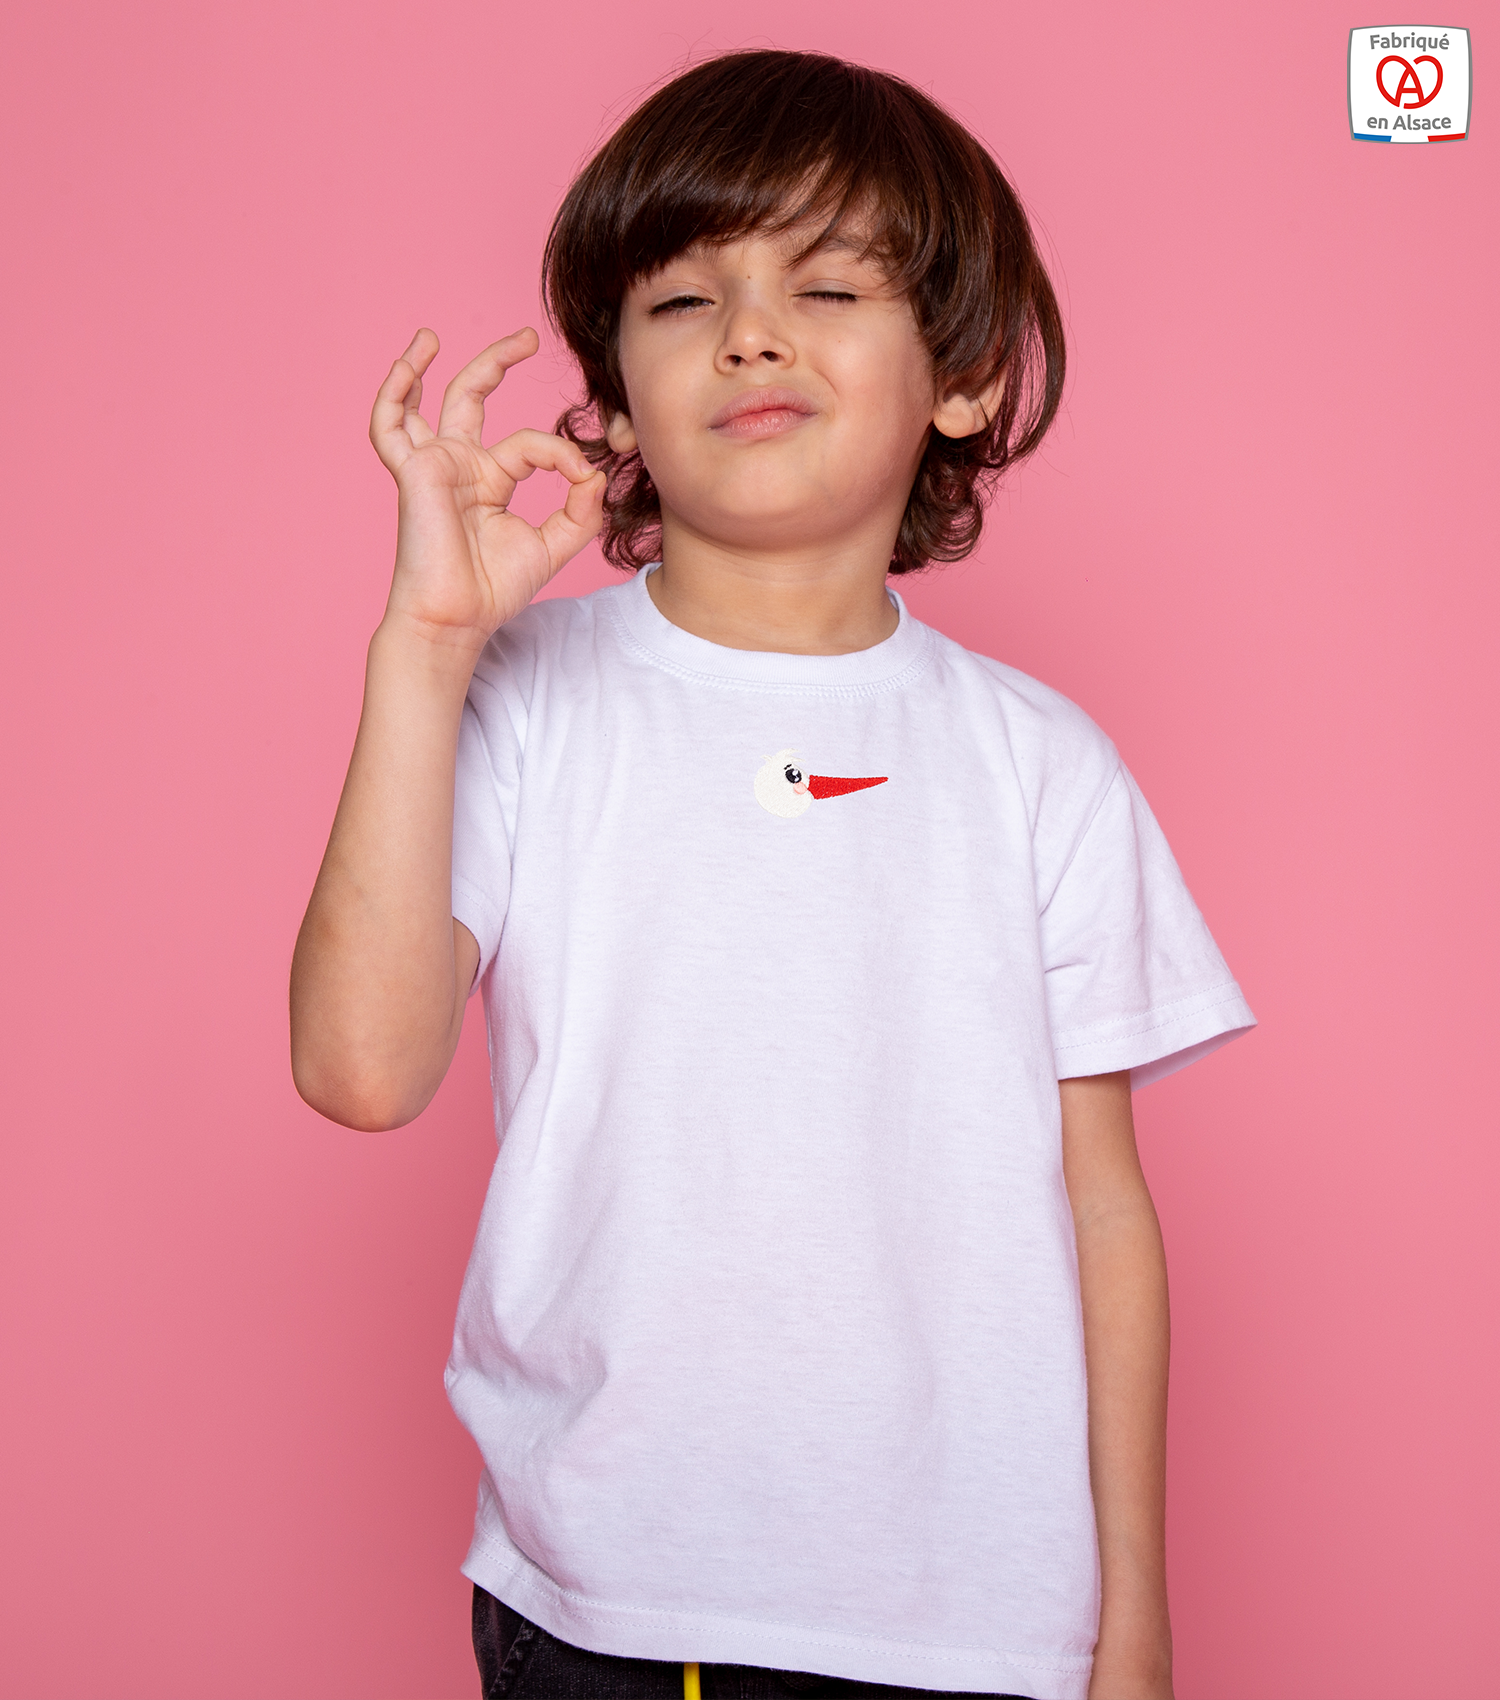 theim-kids-t-shirt-enfant-made-in-alsace-cigogne-1500x1700px